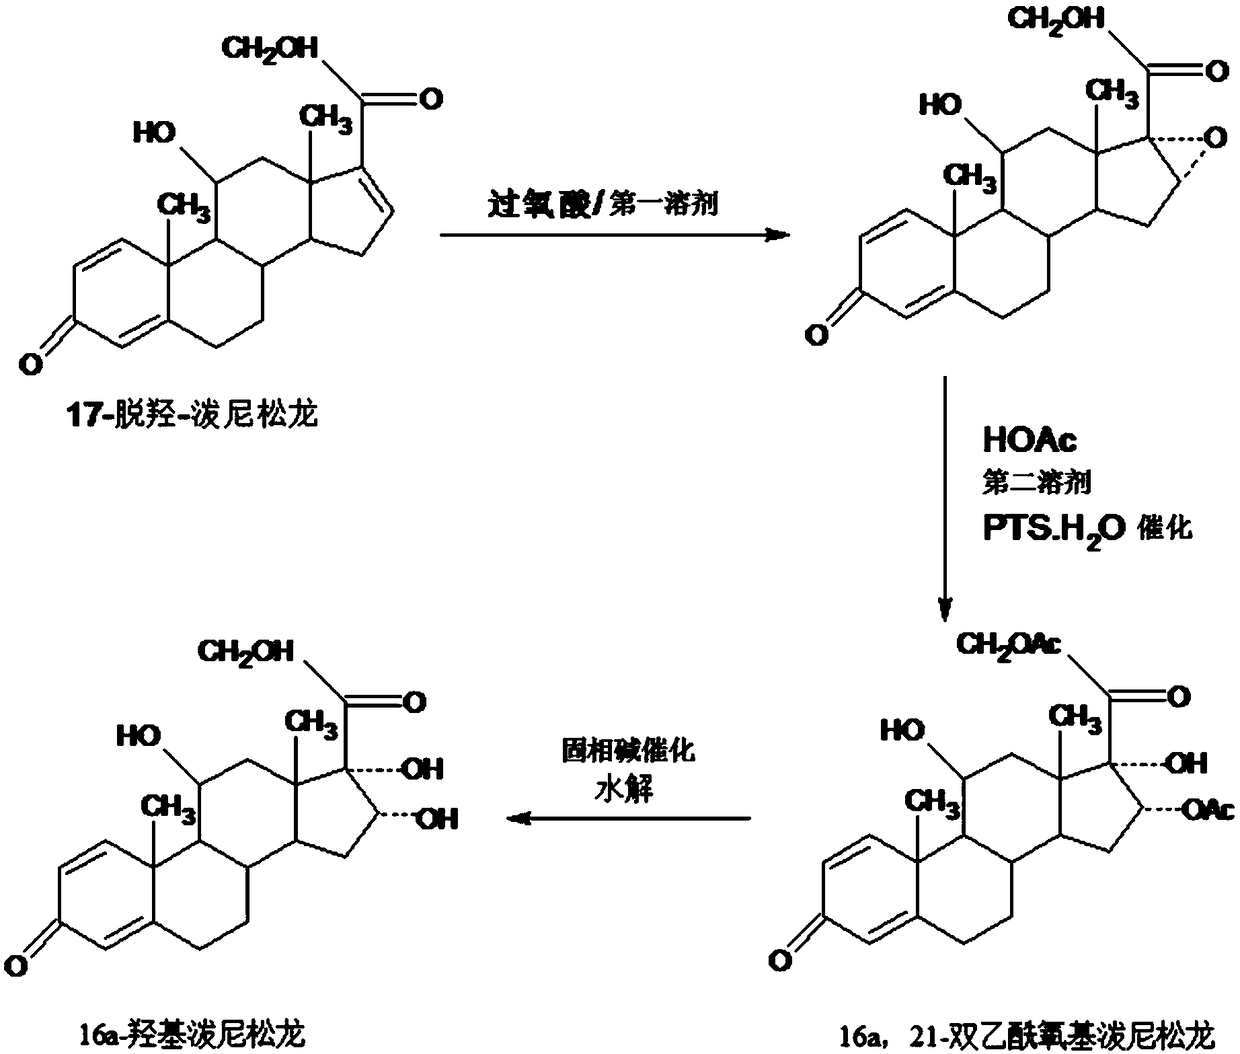 Method for preparing 16a, 21-diacetoxyprednisolone product